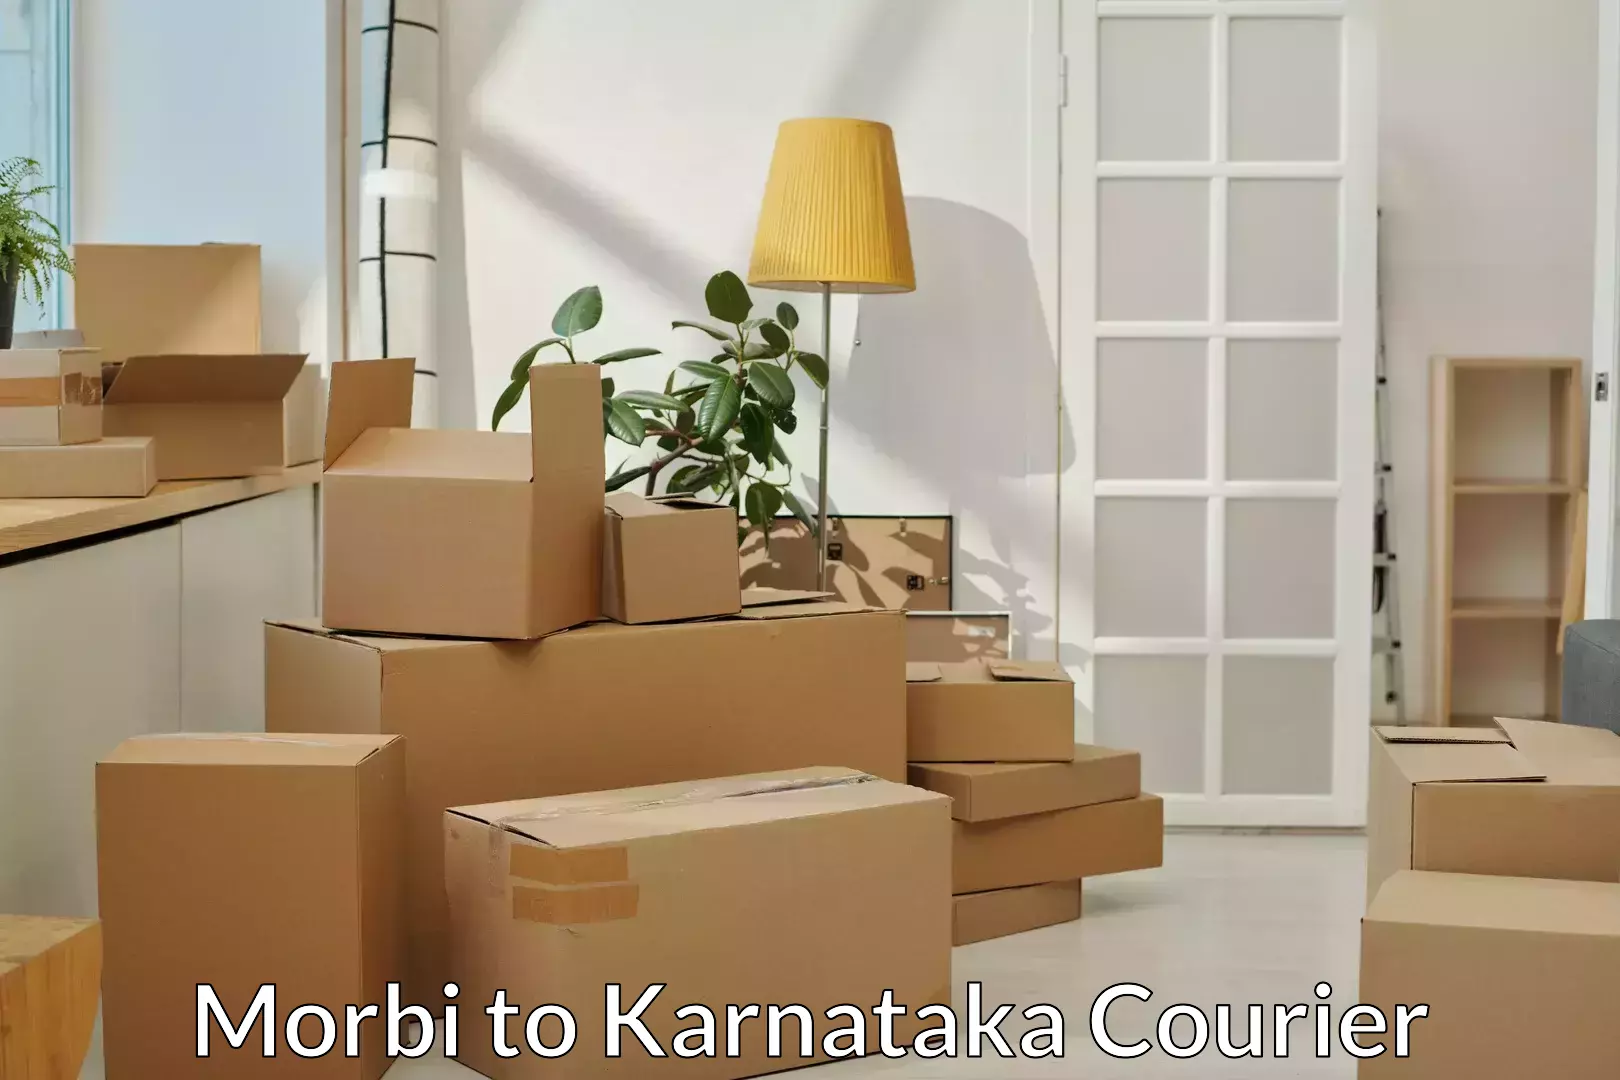 Trusted relocation experts Morbi to Karnataka